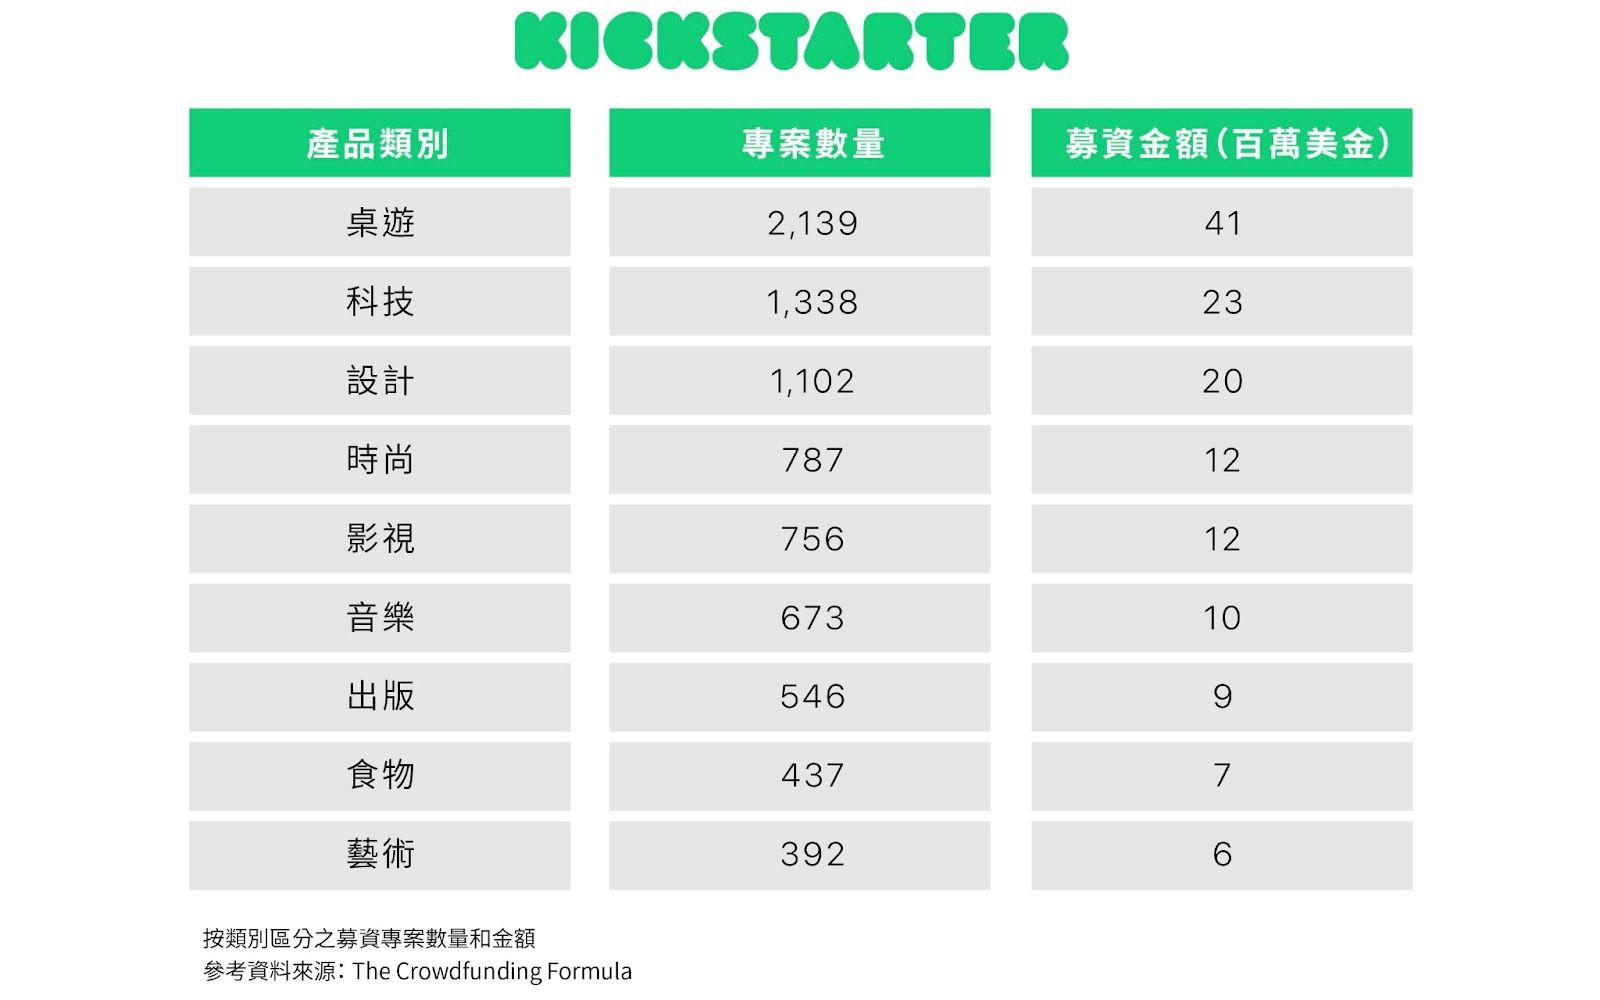 kickstarter 各產品類別專案數量和募資金額比較表